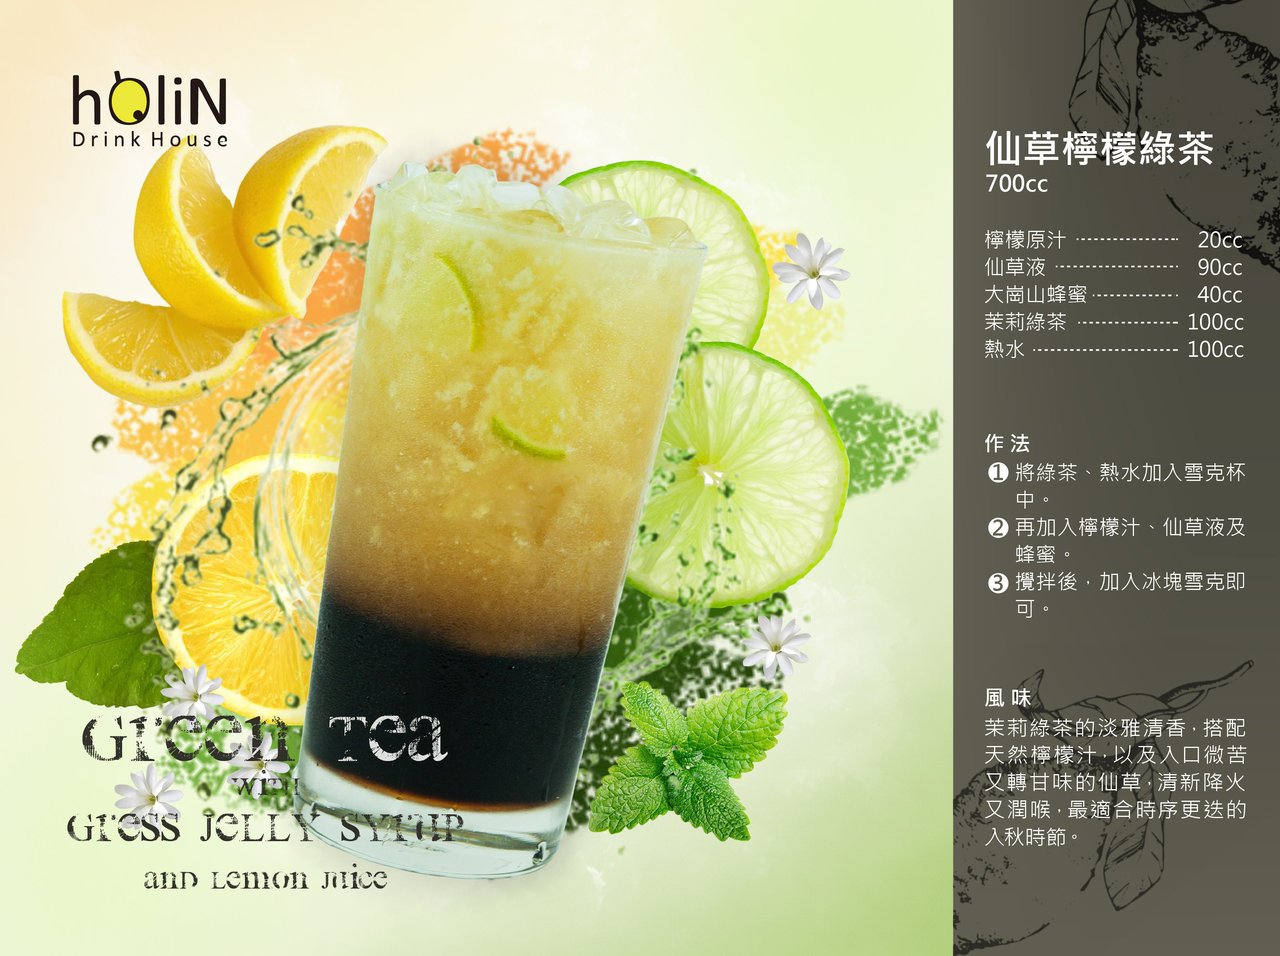  Green tea with gress jelly syrup and lemon juice - Jasmine Green Tea,grass jelly,boba,tapiocapearls,milktea,bubble tea supplier